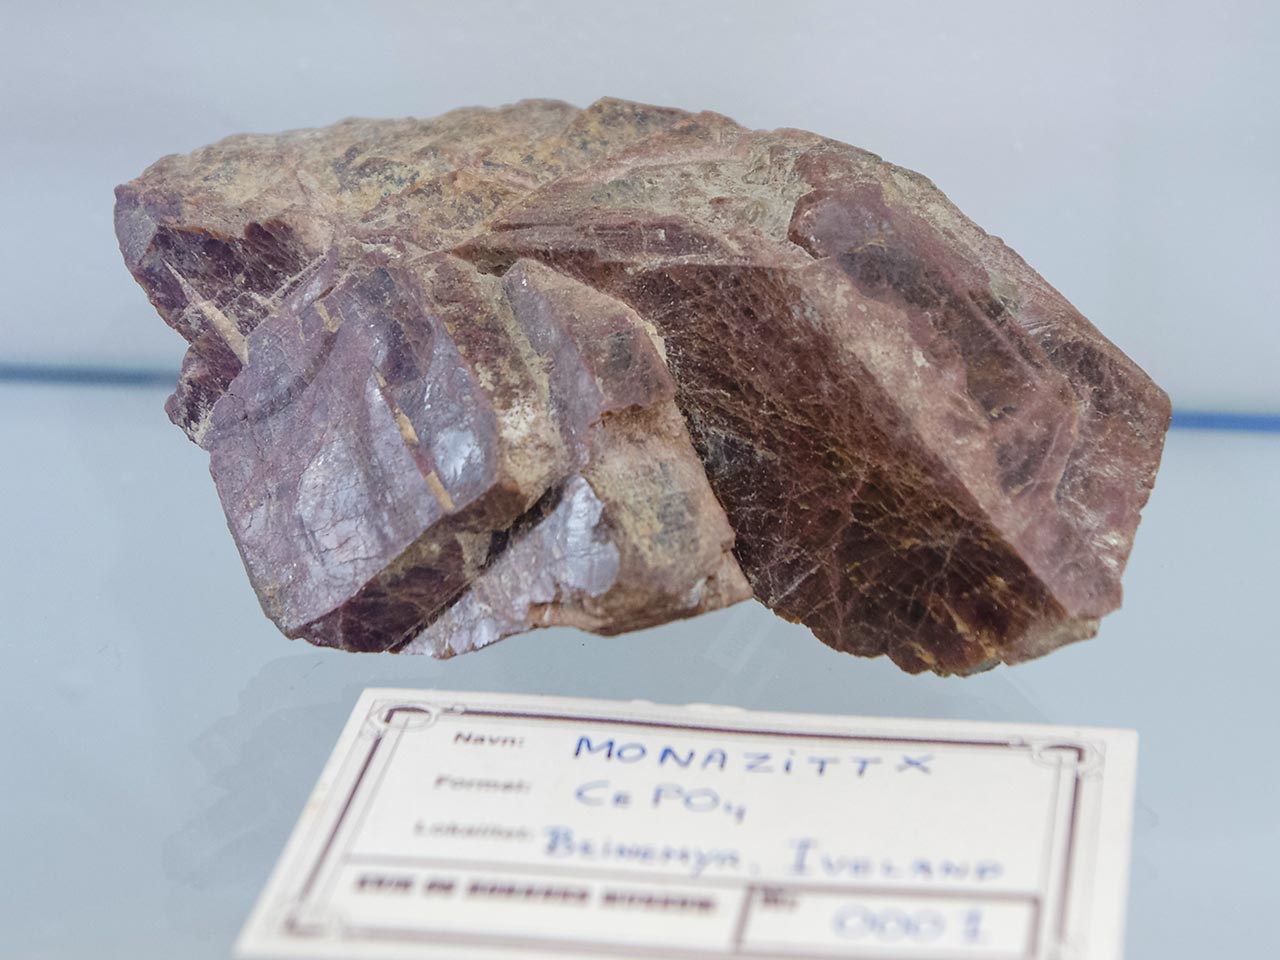 Large monazite-(Ce) crystal from Iveland, Norway